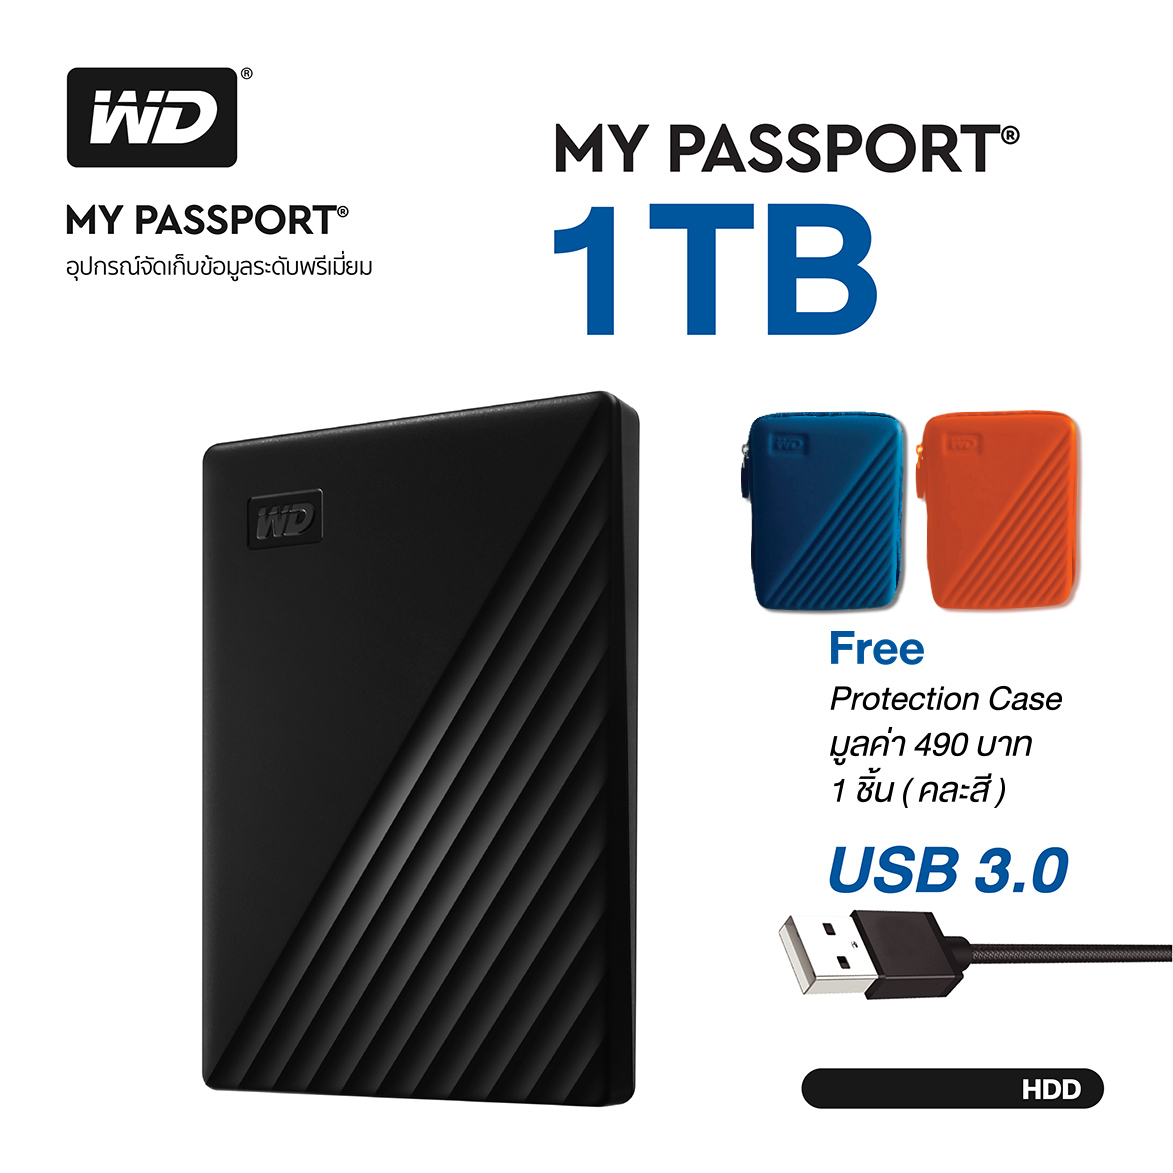 WD My Passport 1TB, Black ฟรี! กระเป๋ากันกระแทก (คละสี) USB 3.0, HDD 2.5 ( WDBYVG0010BBK-WESN ) ( ฮาร์ดดิสพกพา Internal Harddisk Harddrive )